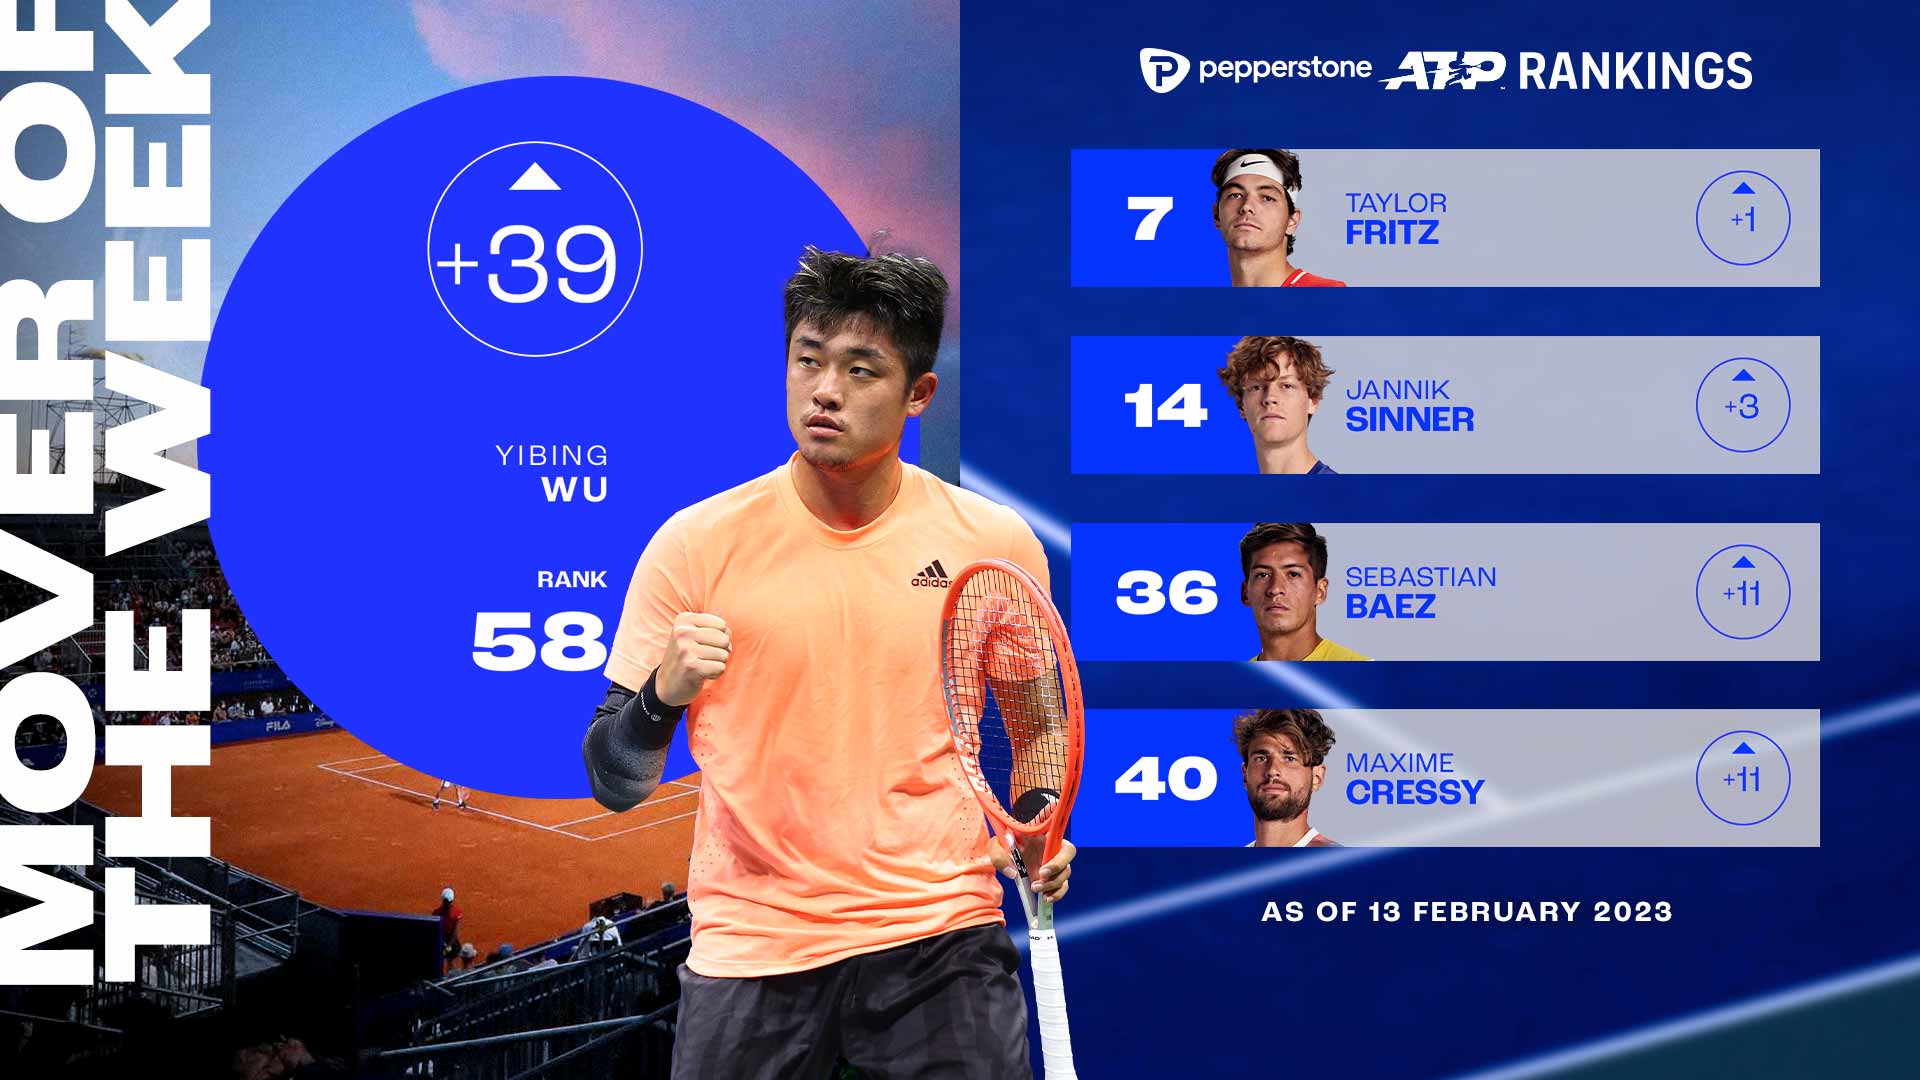 Rankings Pepperstone ATP Rankings ATP Tour Tennis